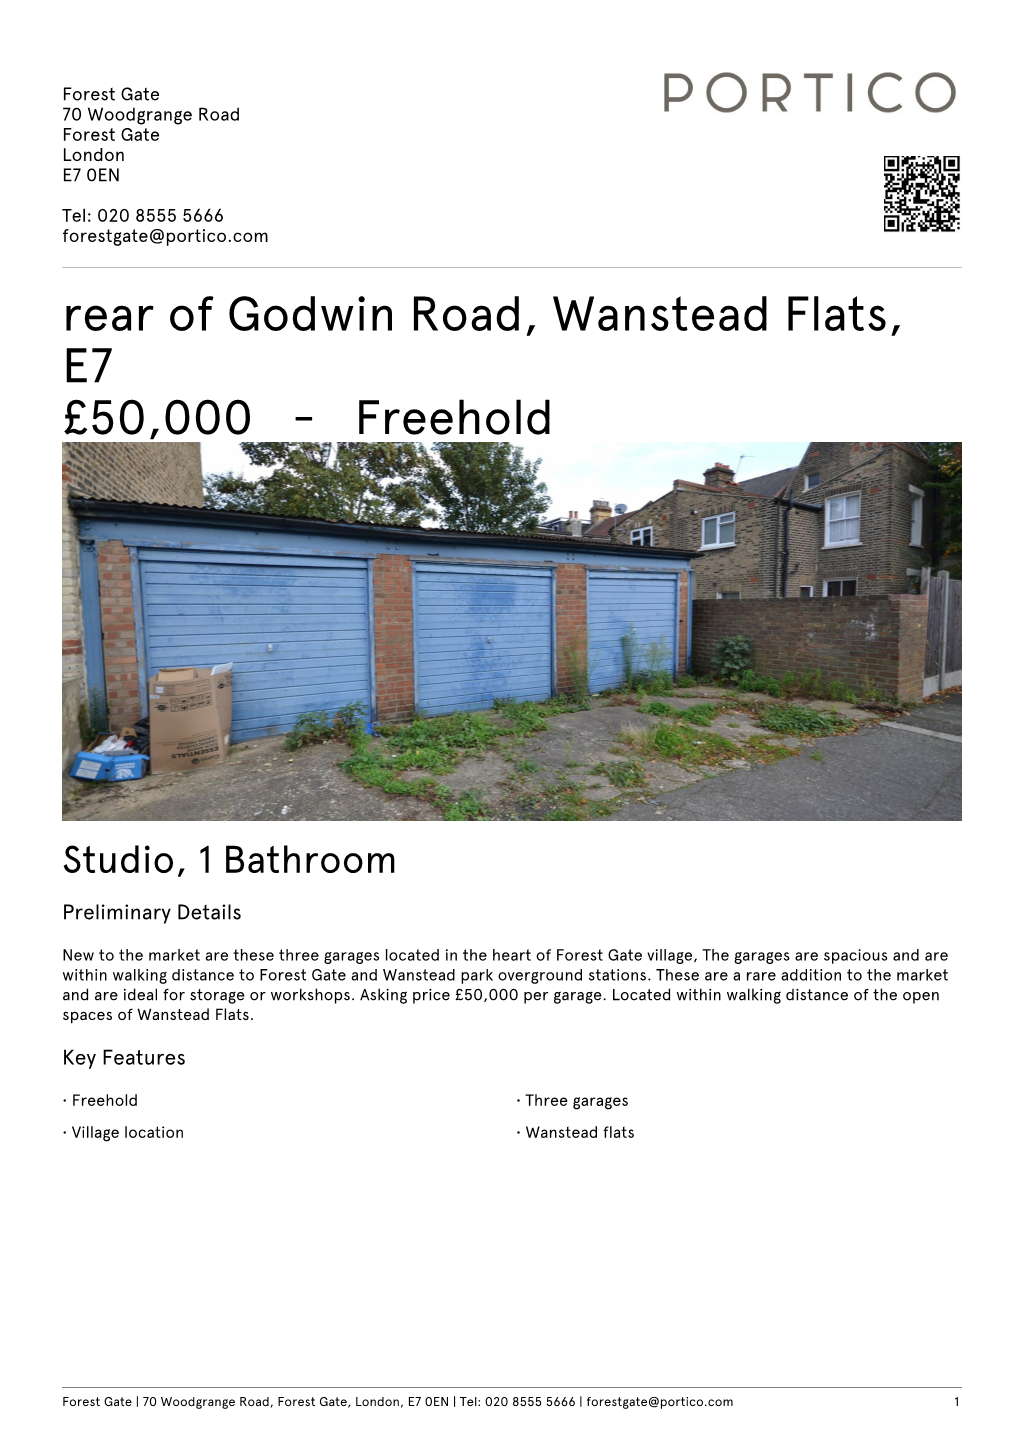 Rear of Godwin Road, Wanstead Flats, E7 £50,000